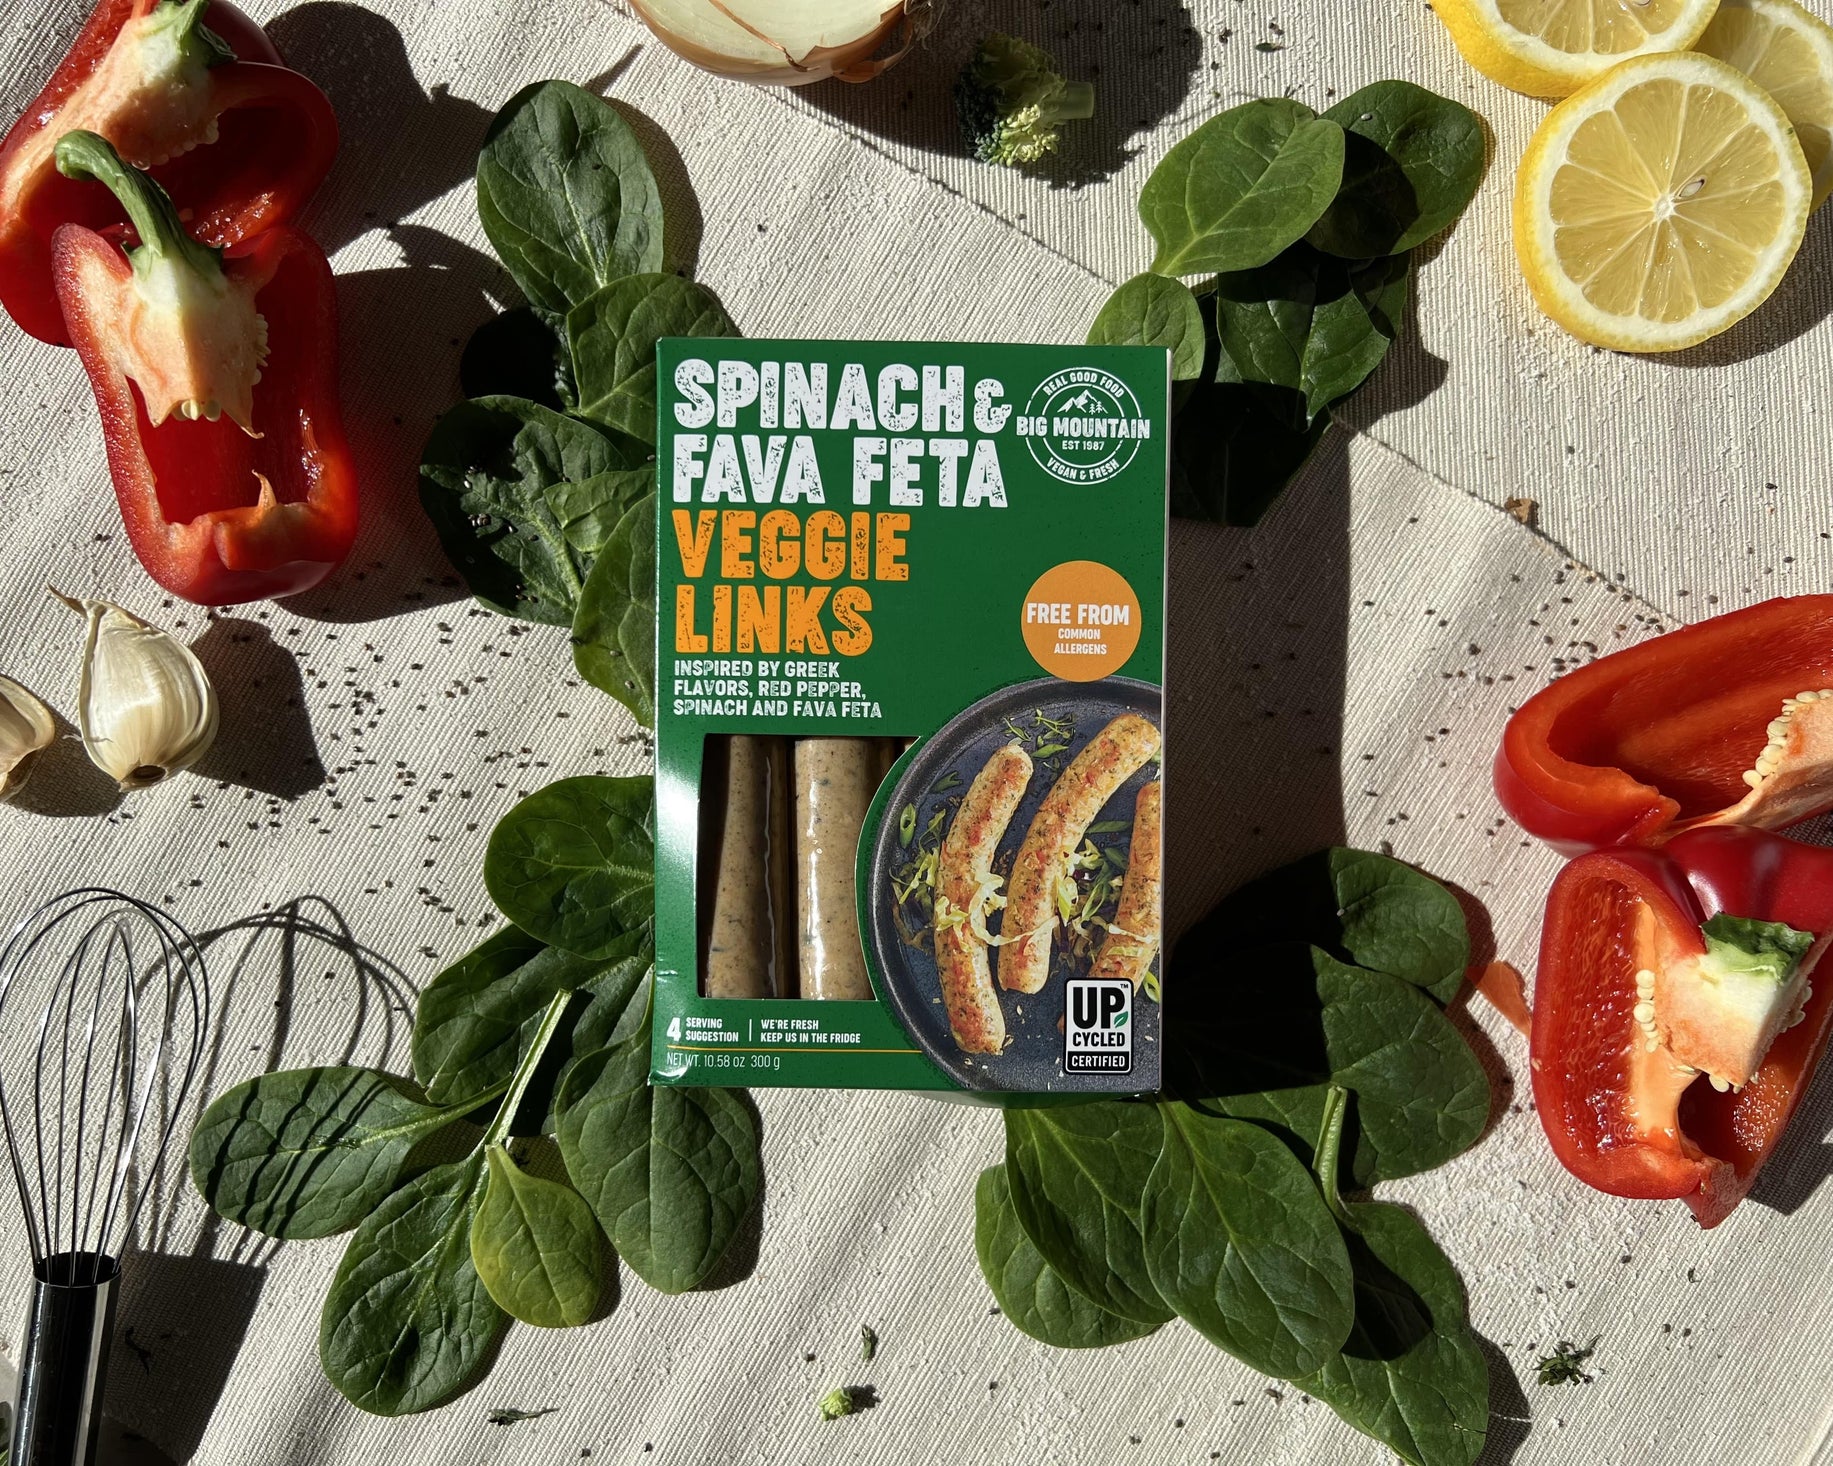 Spinach and Fava Feta Veggie Links